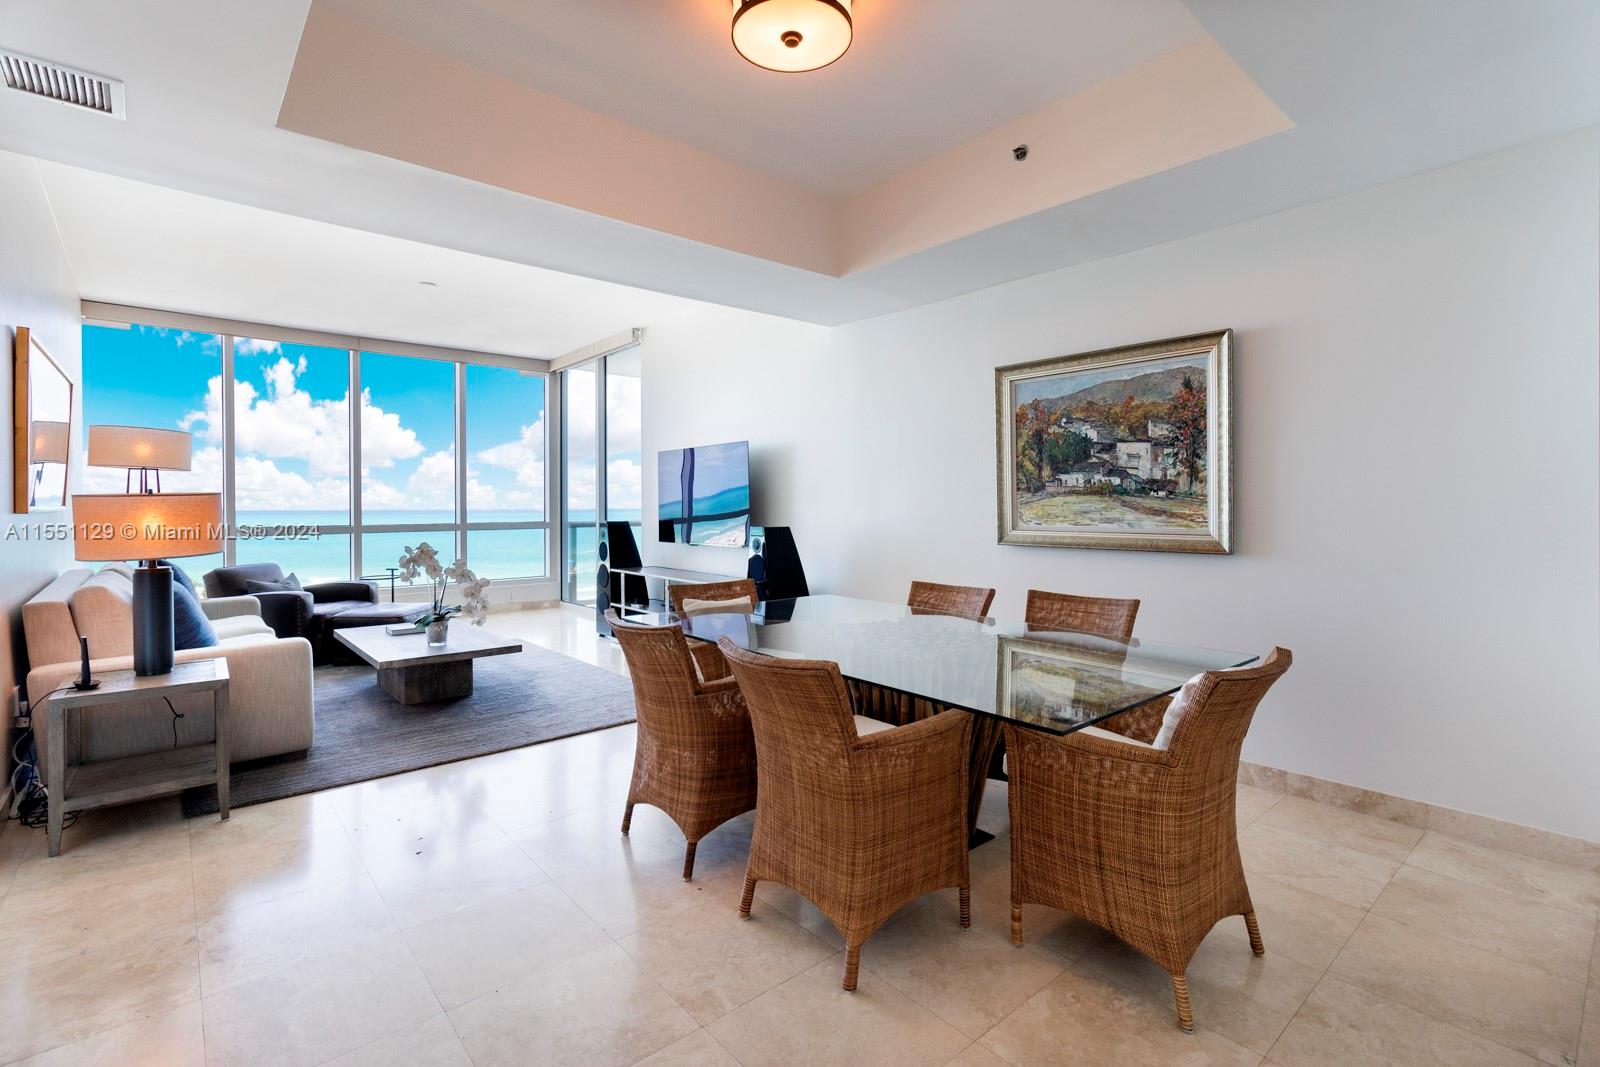 Property for Sale at 100 S Pointe Dr 907, Miami Beach, Miami-Dade County, Florida - Bedrooms: 2 
Bathrooms: 2.5  - $5,950,000